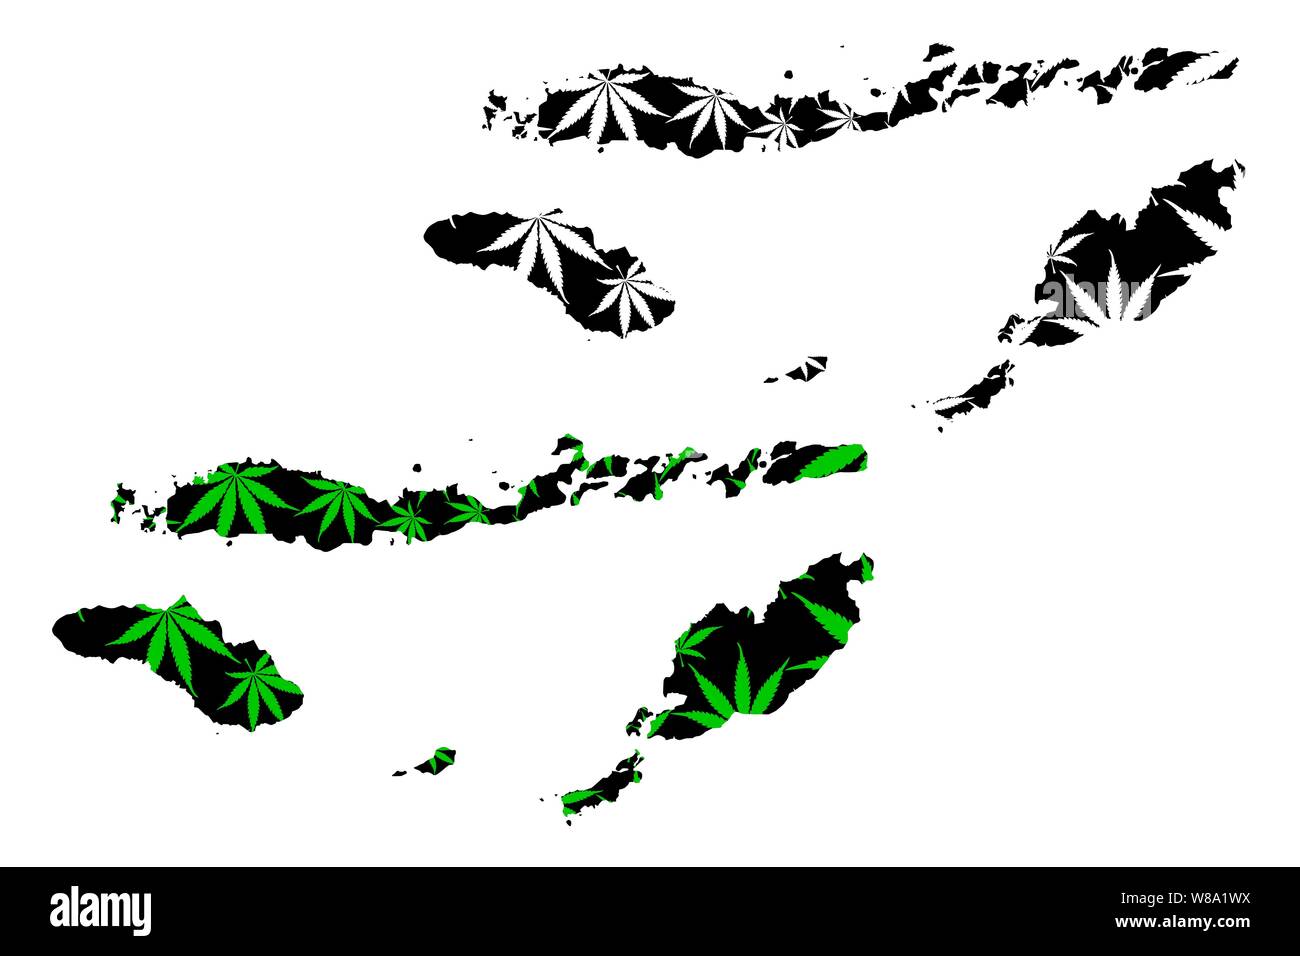 Nusa Tenggara Est (suddivisioni di Indonesia, Province) mappa è progettato Cannabis leaf verde e nero, Nusa Tenggara Timur (Lesser Sunda Islands) ma Illustrazione Vettoriale